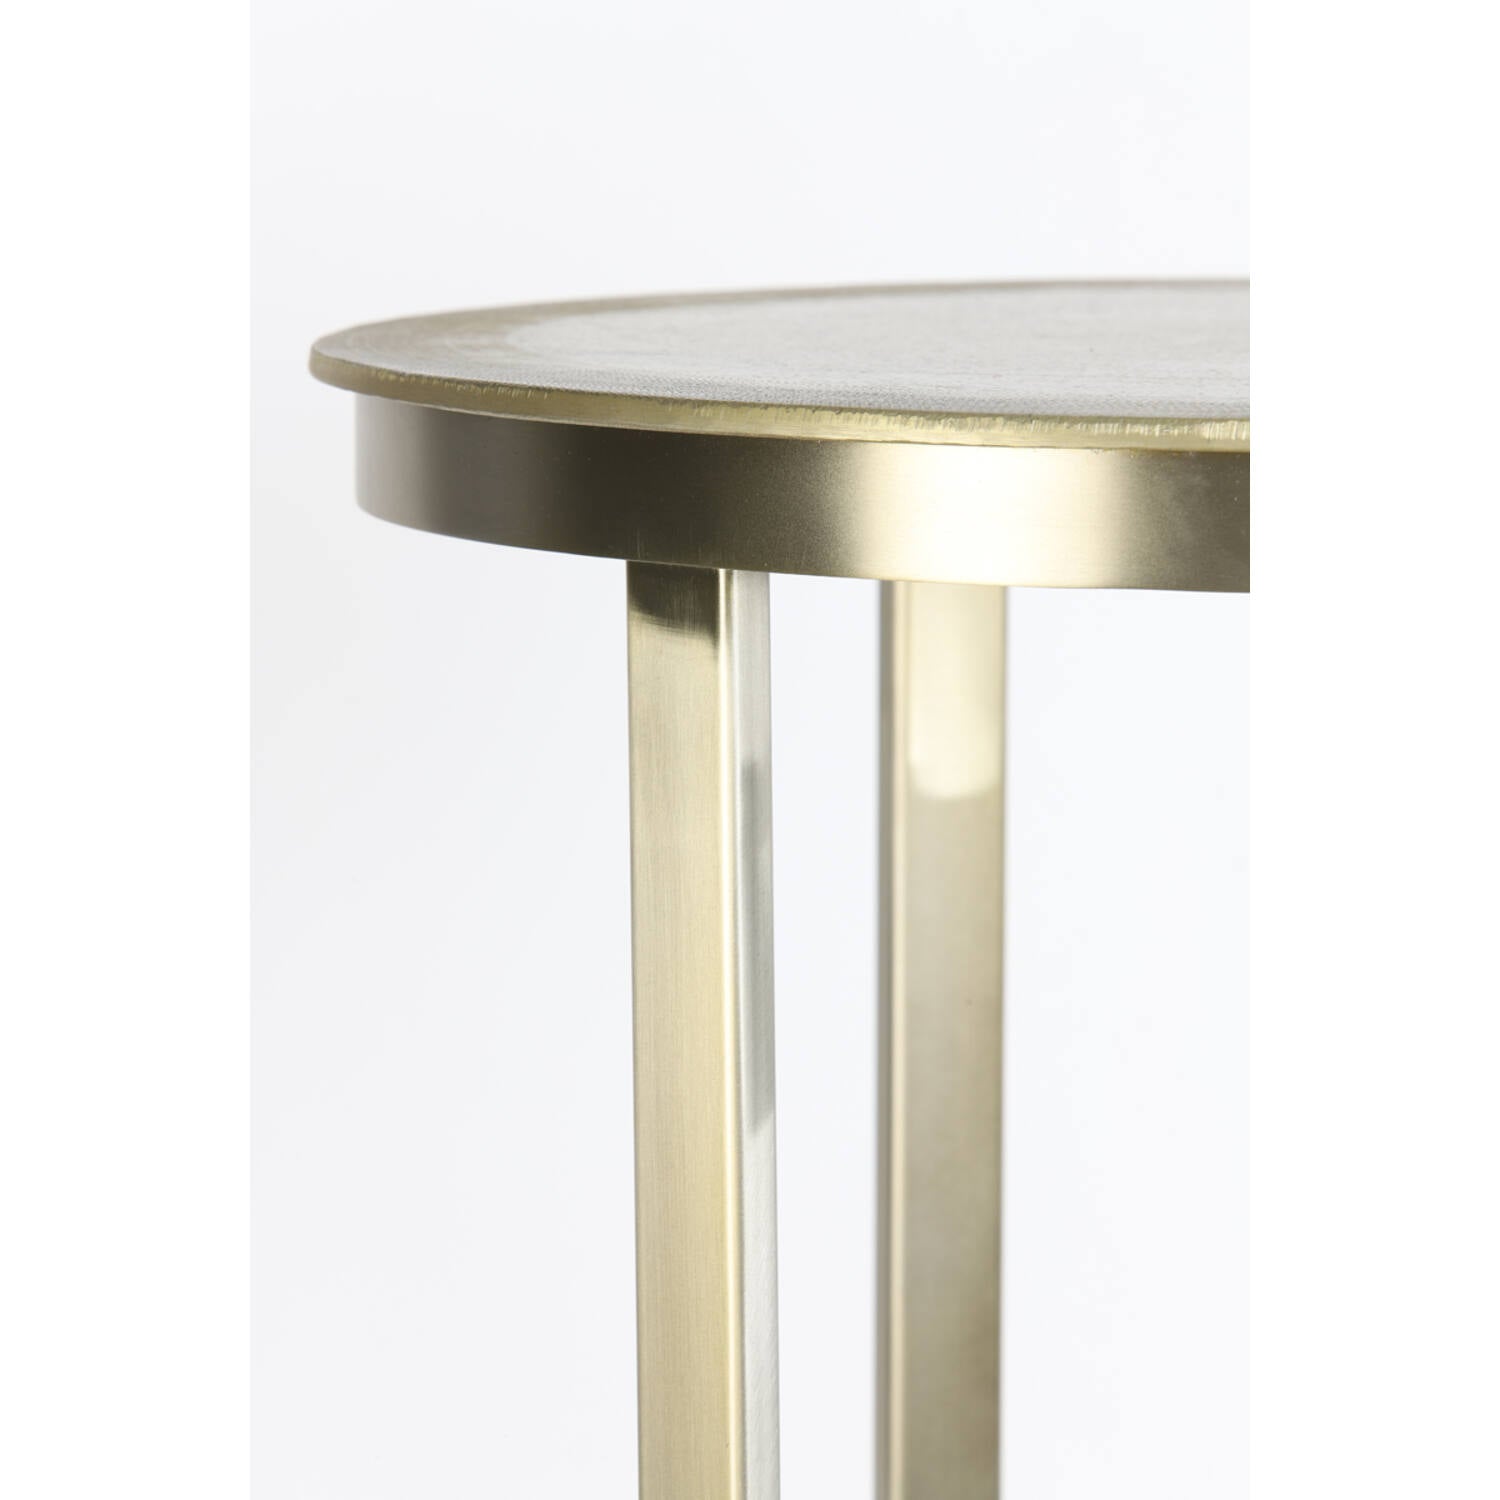 Retiro Medium Pillar Side Tables - Light Gold Finish